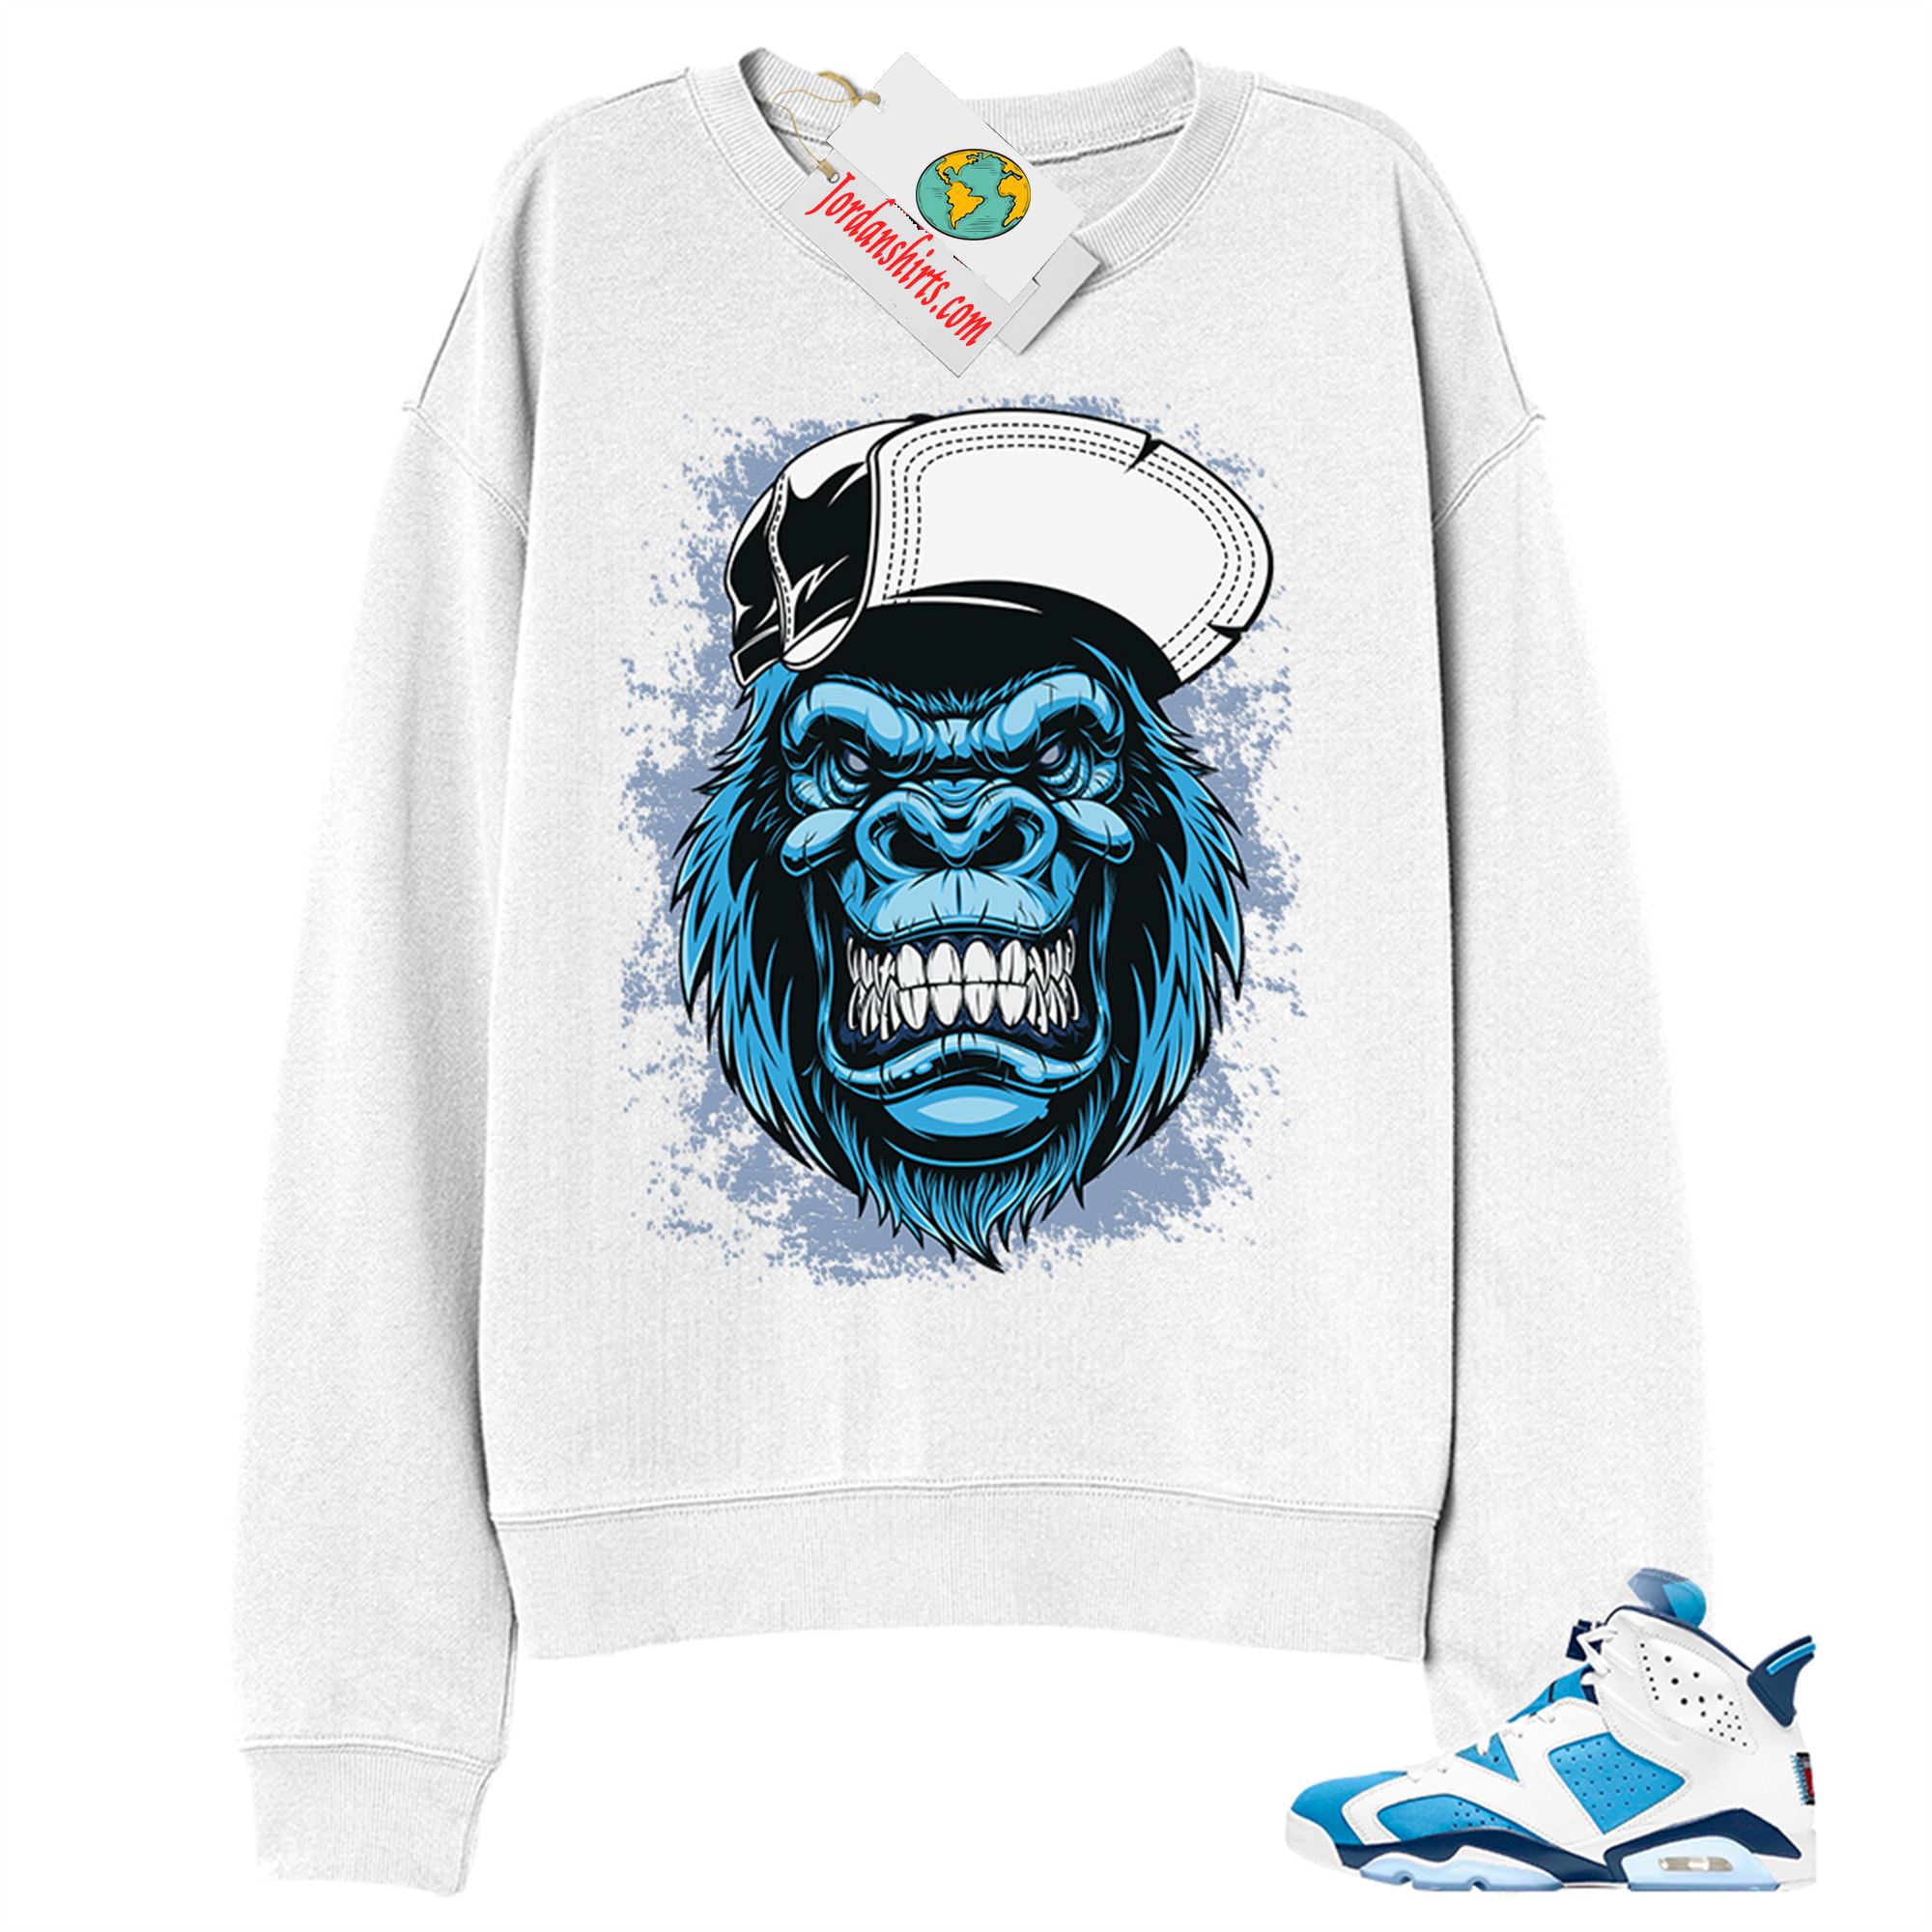 Jordan 6 Sweatshirt, Ferocious Gorilla White Sweatshirt Air Jordan 6 Unc 6s Plus Size Up To 5xl